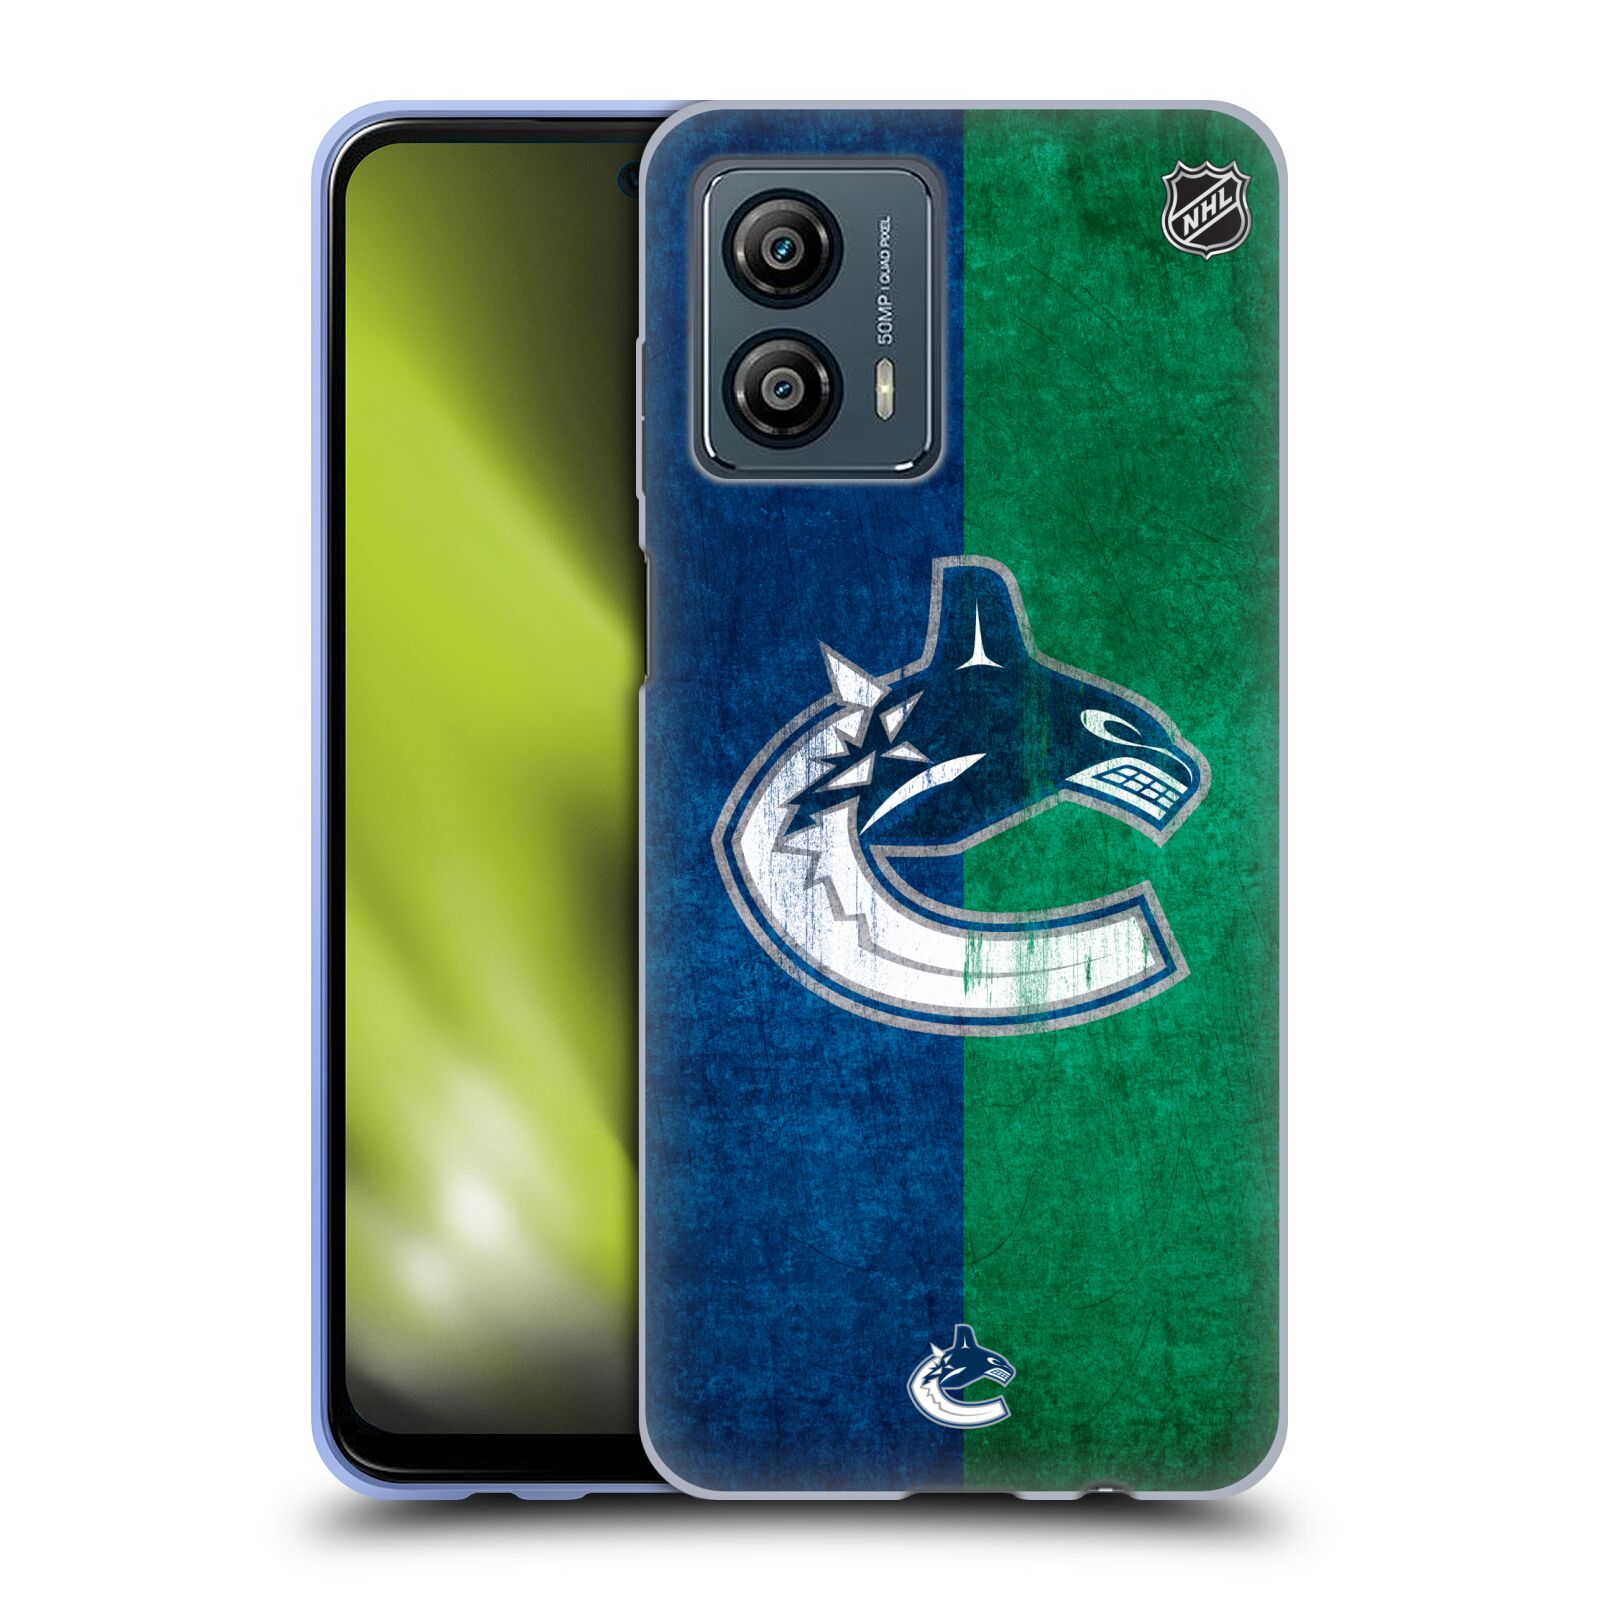 Silikonové pouzdro na mobil Motorola Moto G53 5G - NHL - Půlené logo Vancouver Canucks (Silikonový kryt, obal, pouzdro na mobilní telefon Motorola Moto G53 5G s licencovaným motivem NHL - Půlené logo Vancouver Canucks)